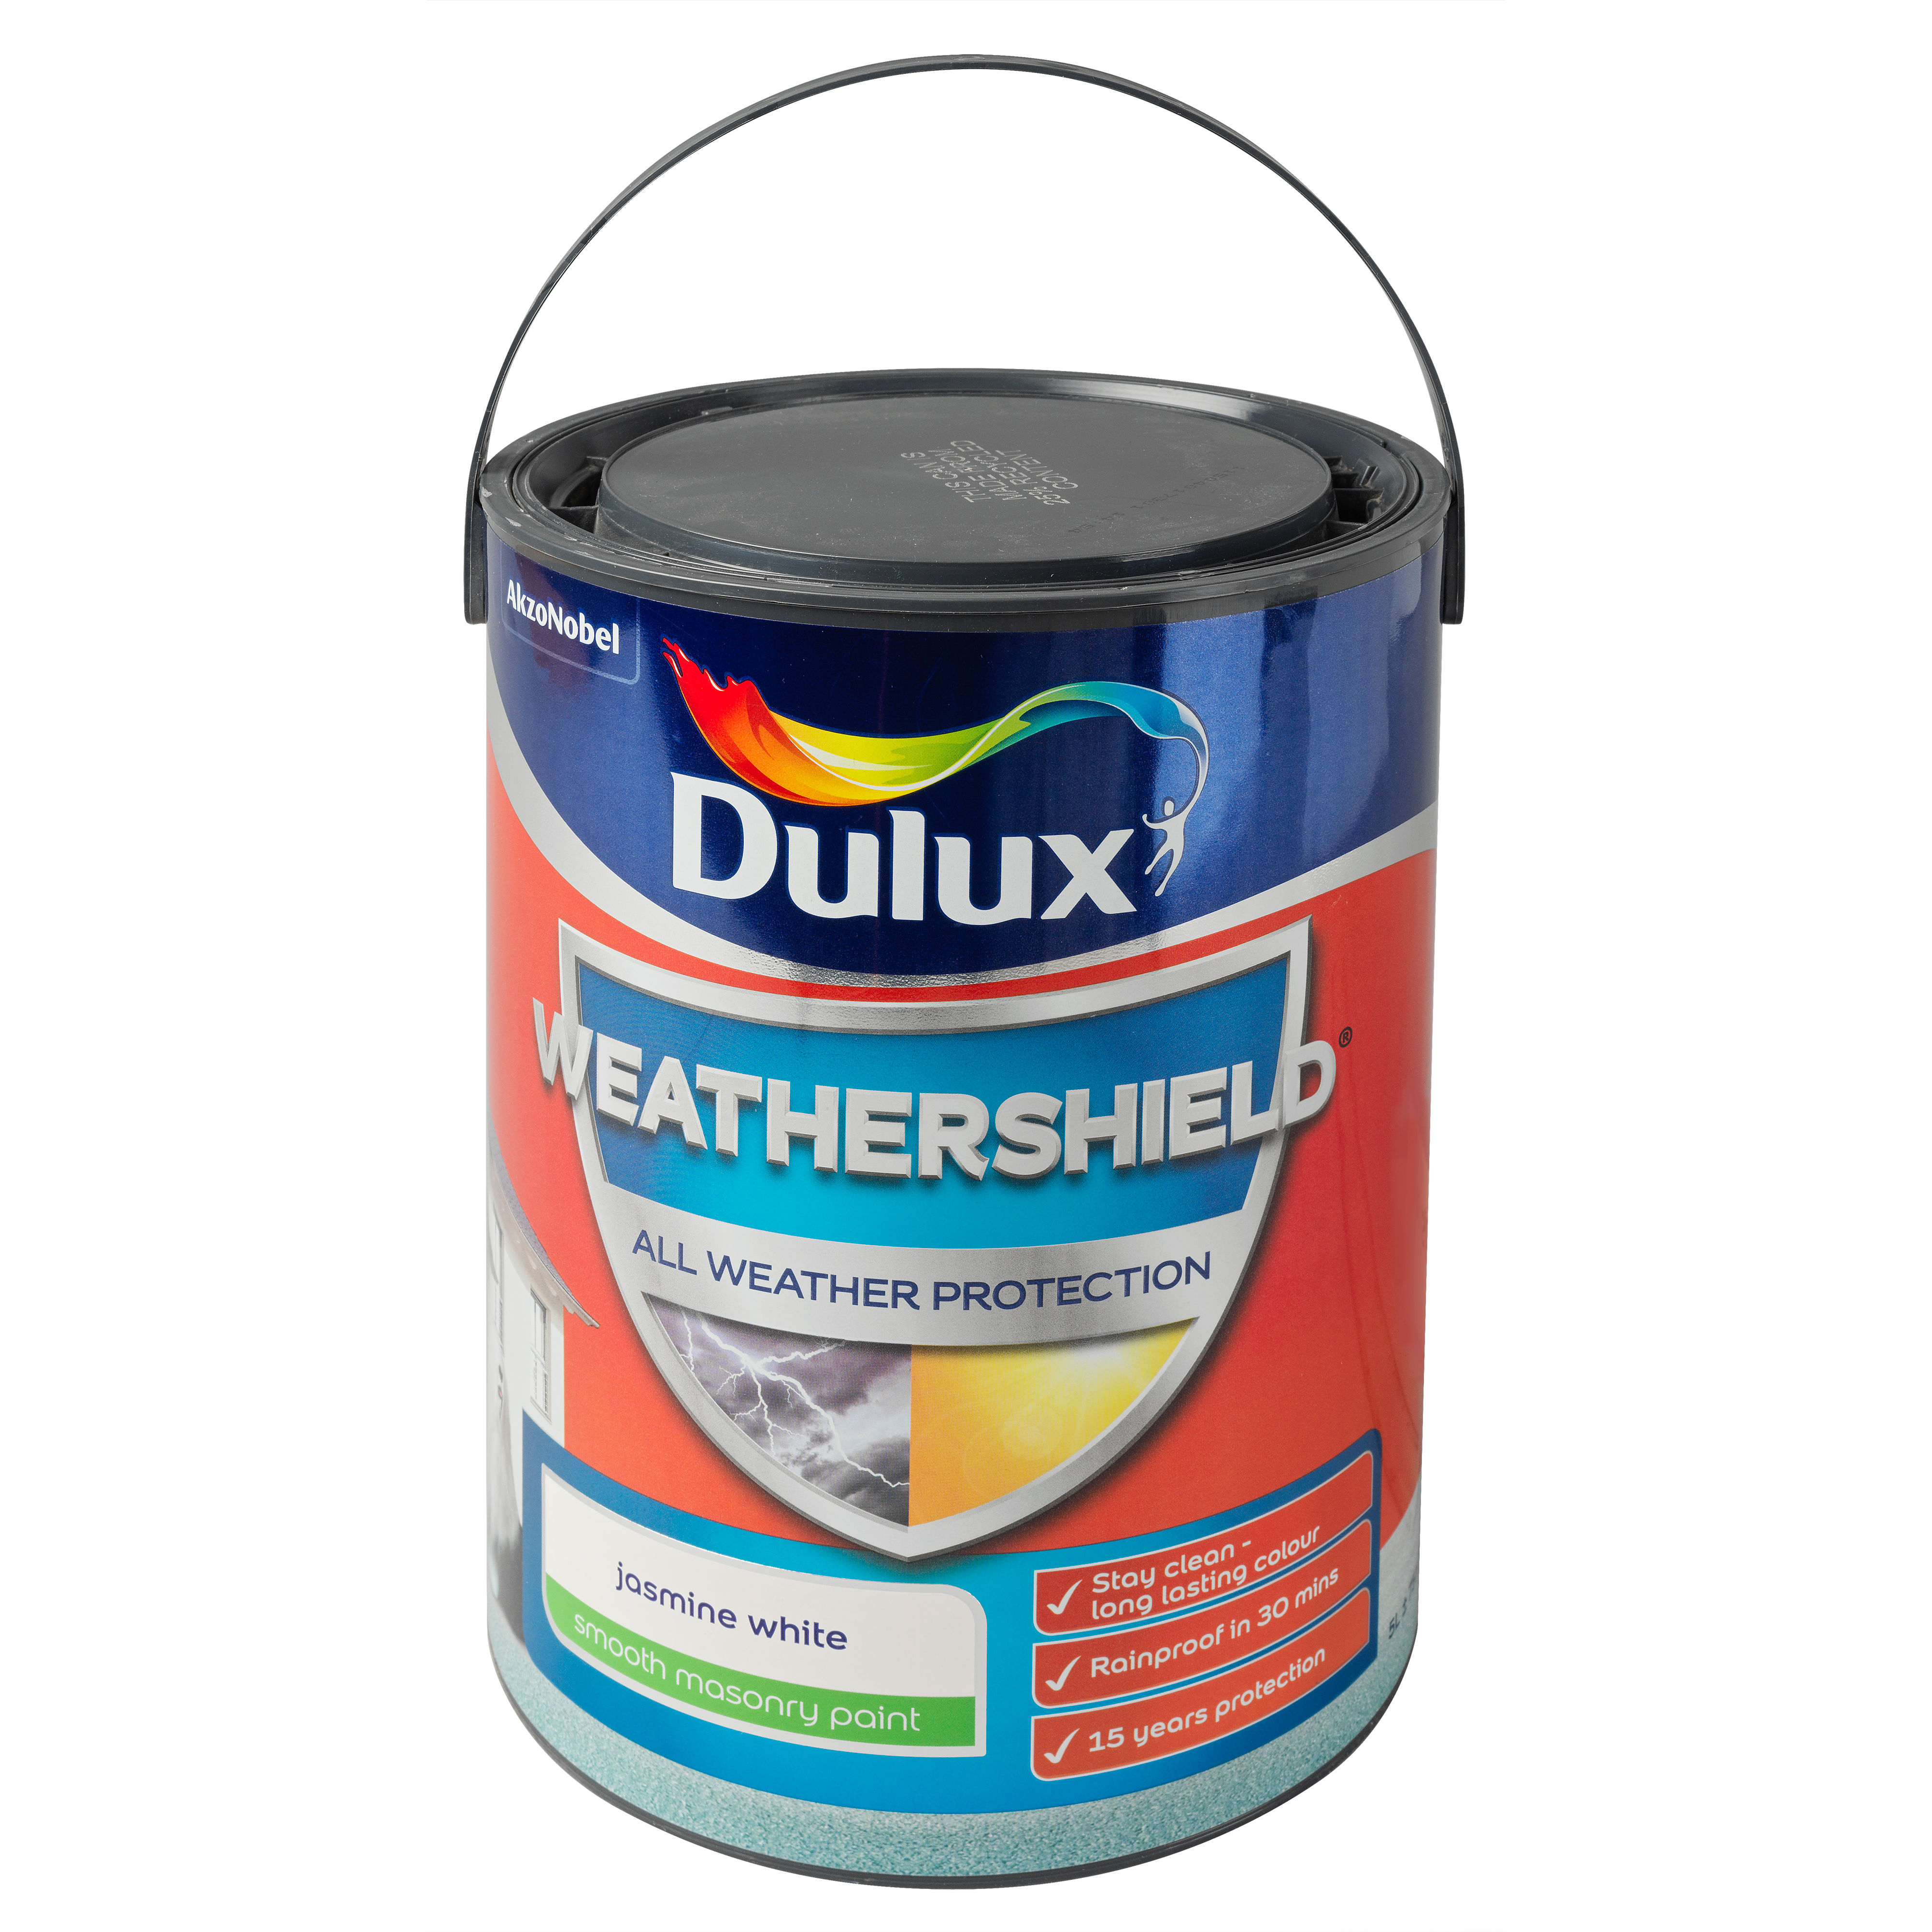 Dulux Weathershield All Weather Protection Smooth Masonry Paint - Jasmine White (5L)